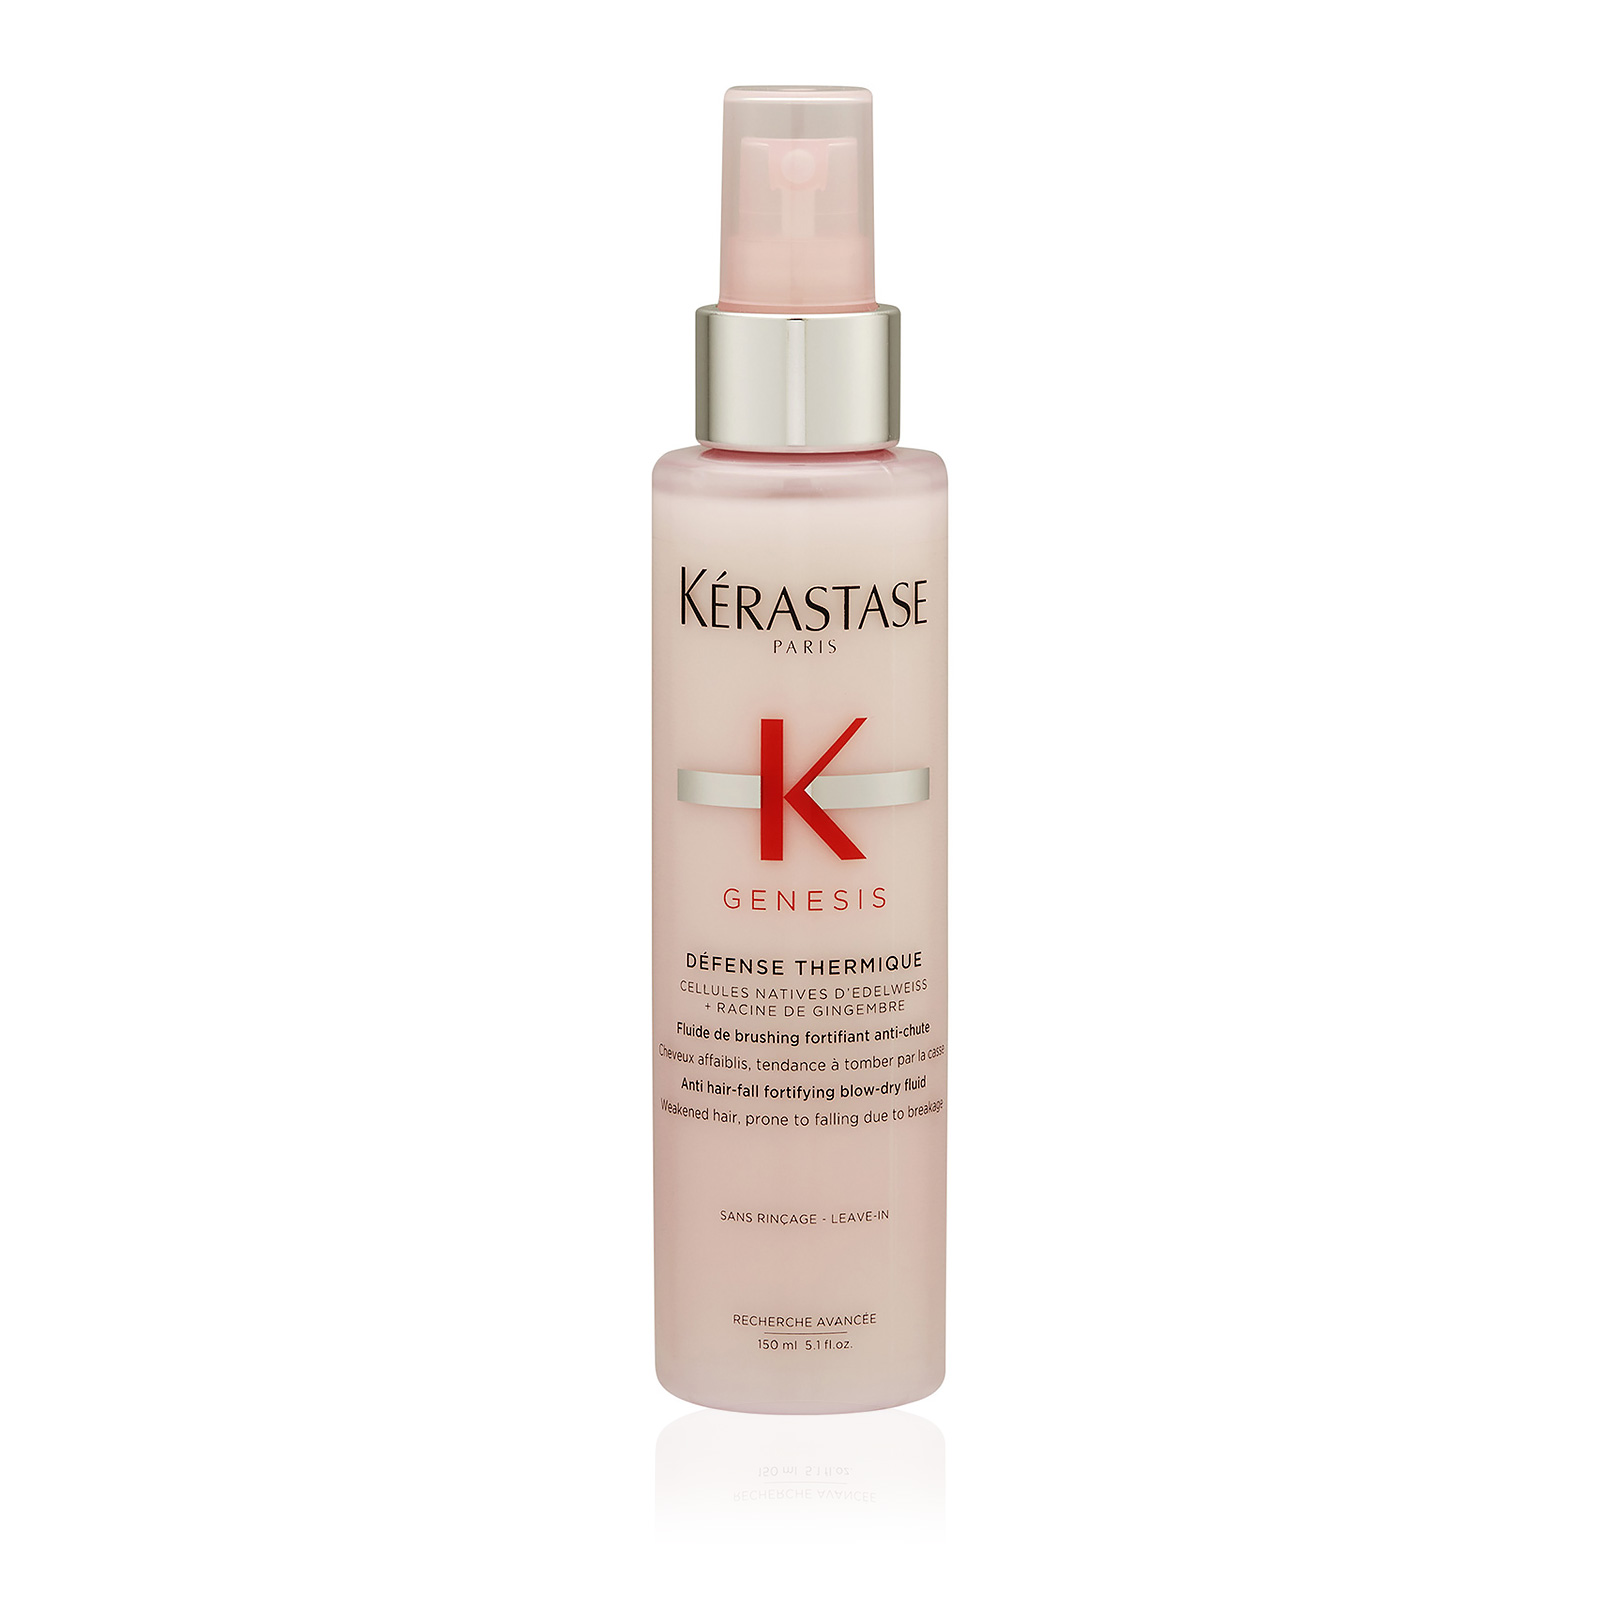 Kerastase Genesis Defense Thermique Anti Hair-Fall Fortifying Blow-Dry Fluid